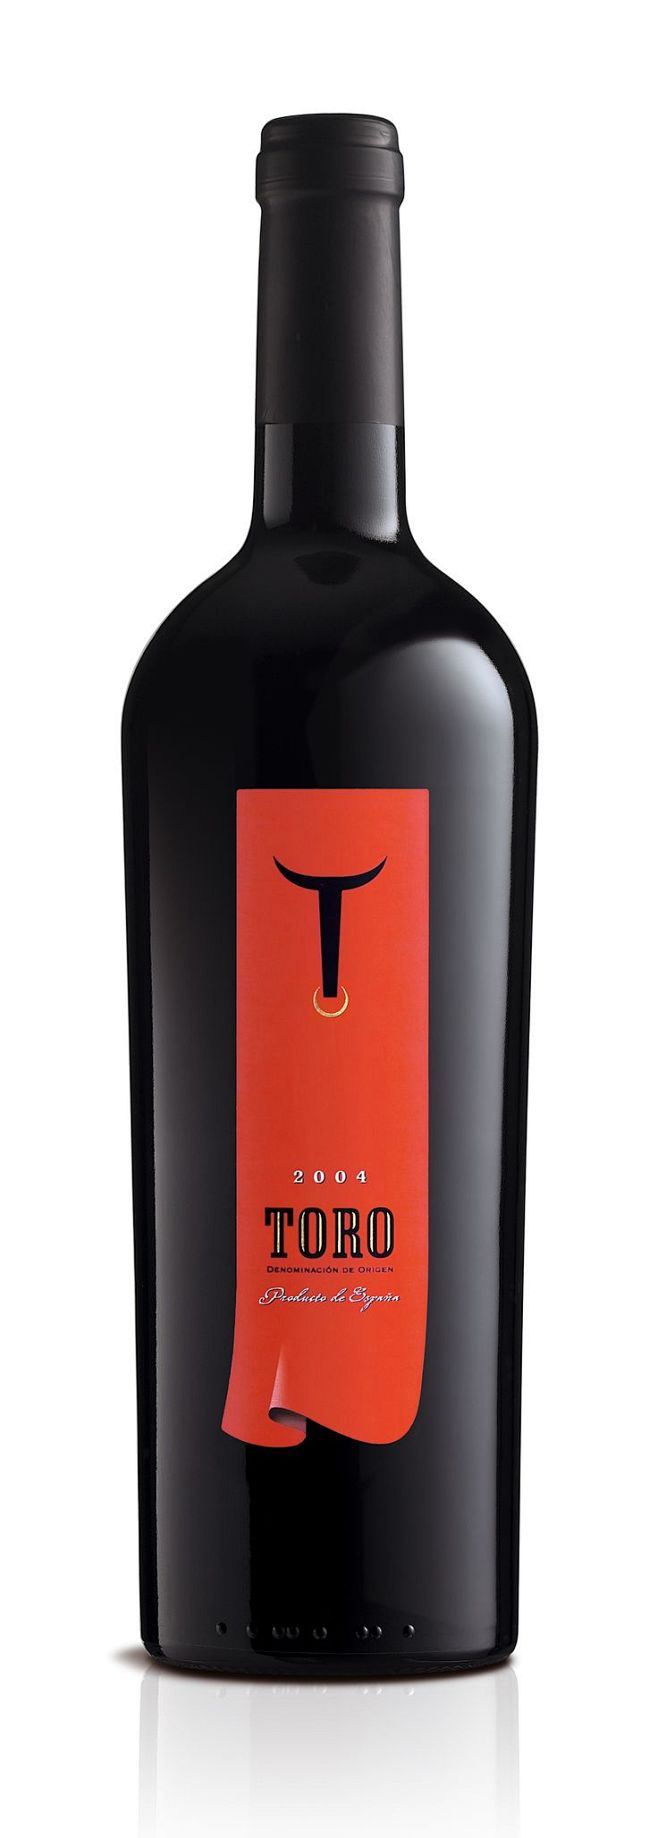 Toro. Wine label. Sp...